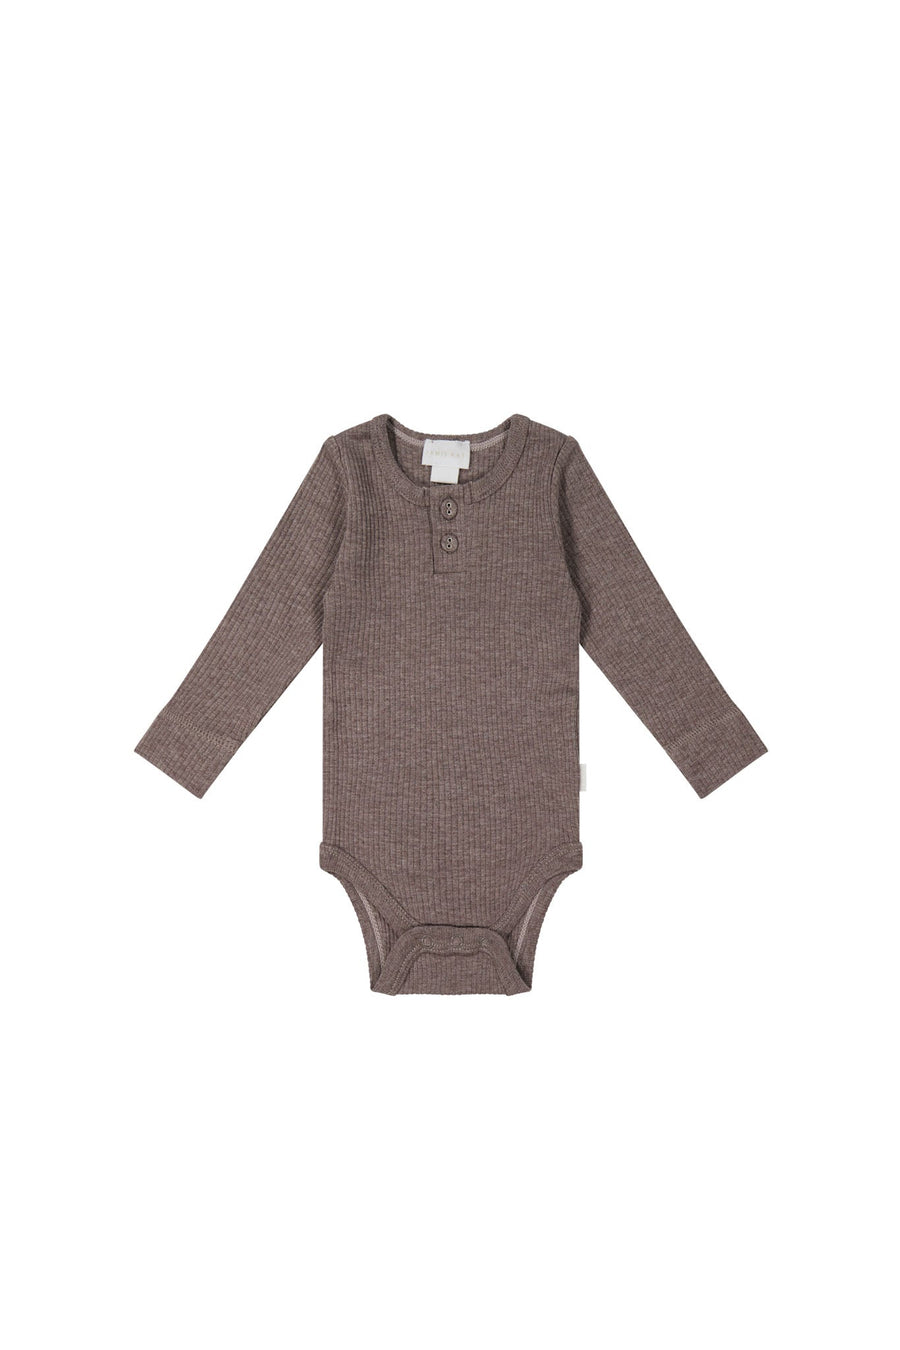 Organic Cotton Modal Long Sleeve Bodysuit - Truffle Marle Childrens Bodysuit from Jamie Kay NZ